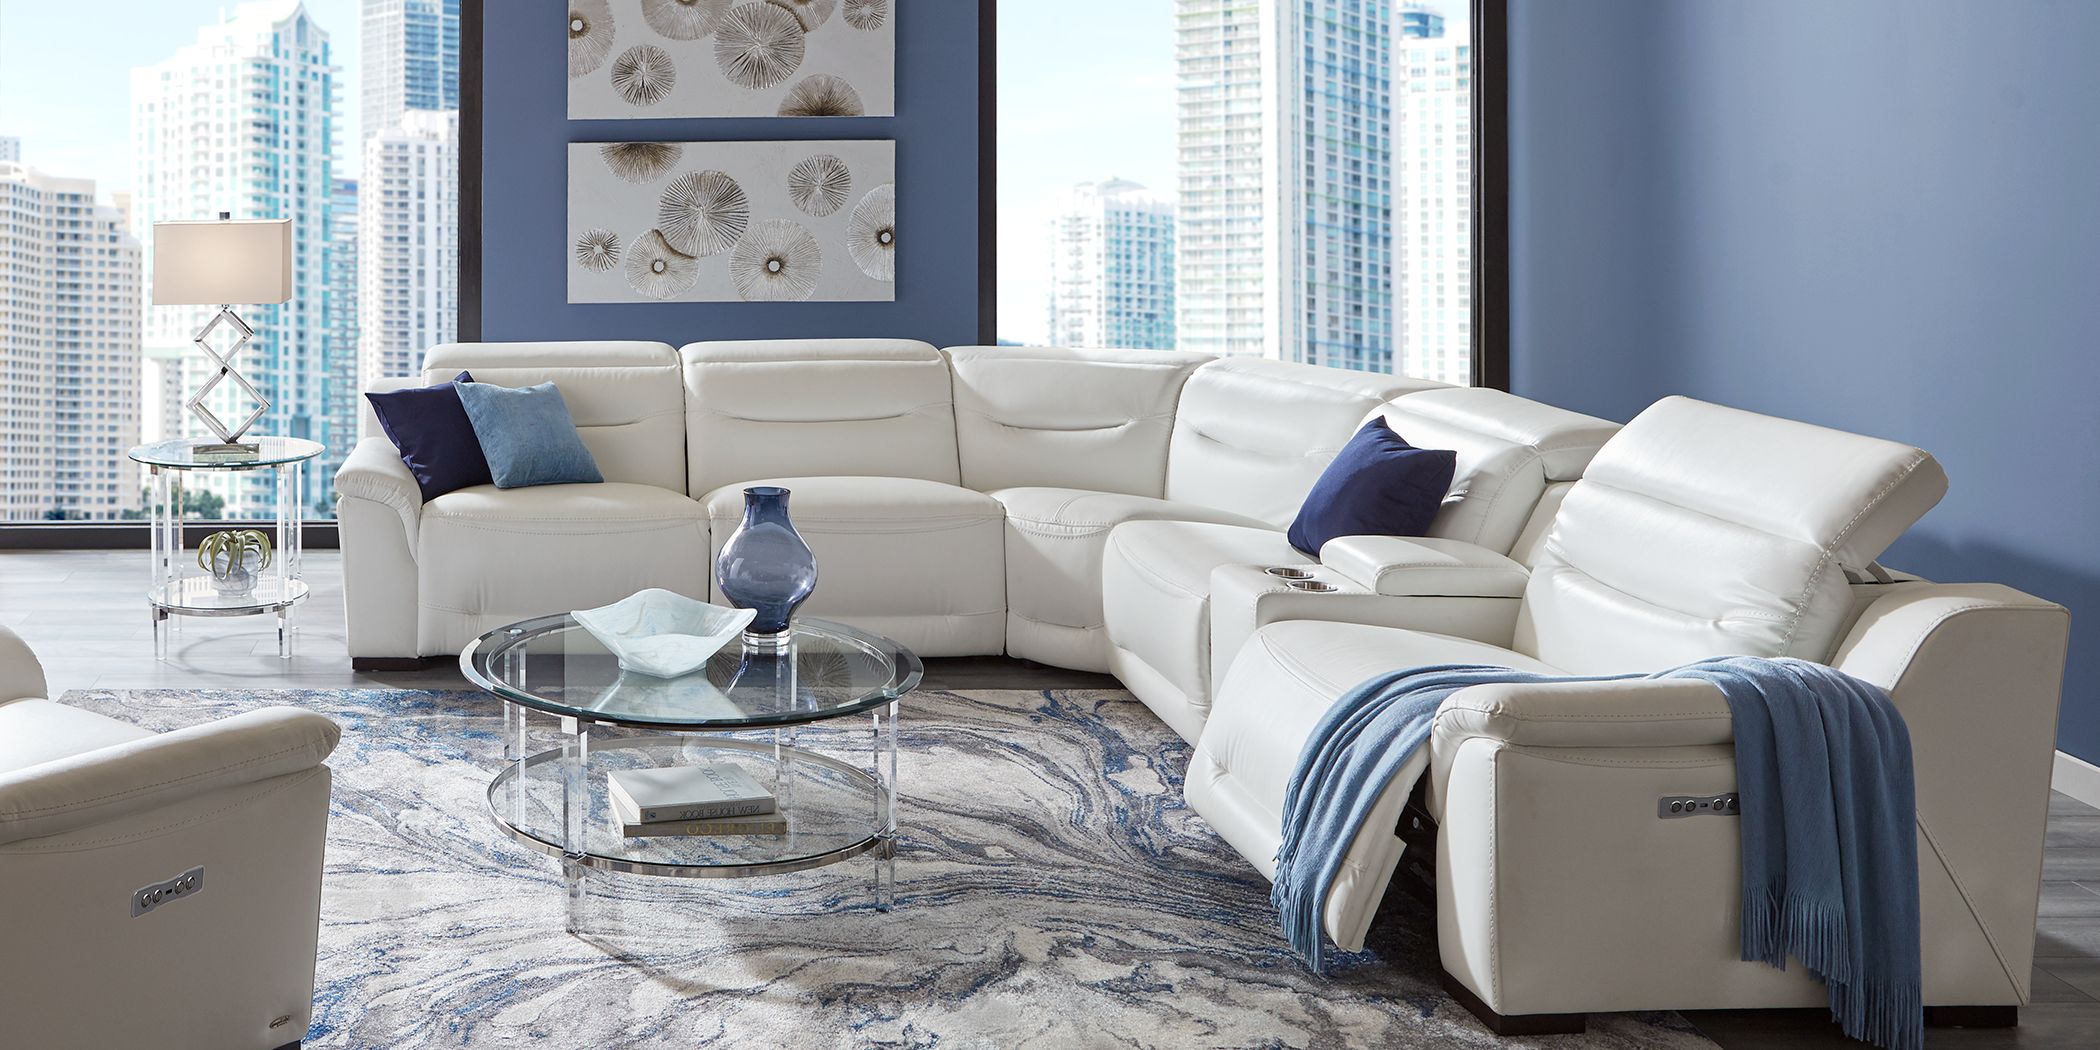 Sofia Vergara Gallia Way White Leather, Living Room White Leather Sectional